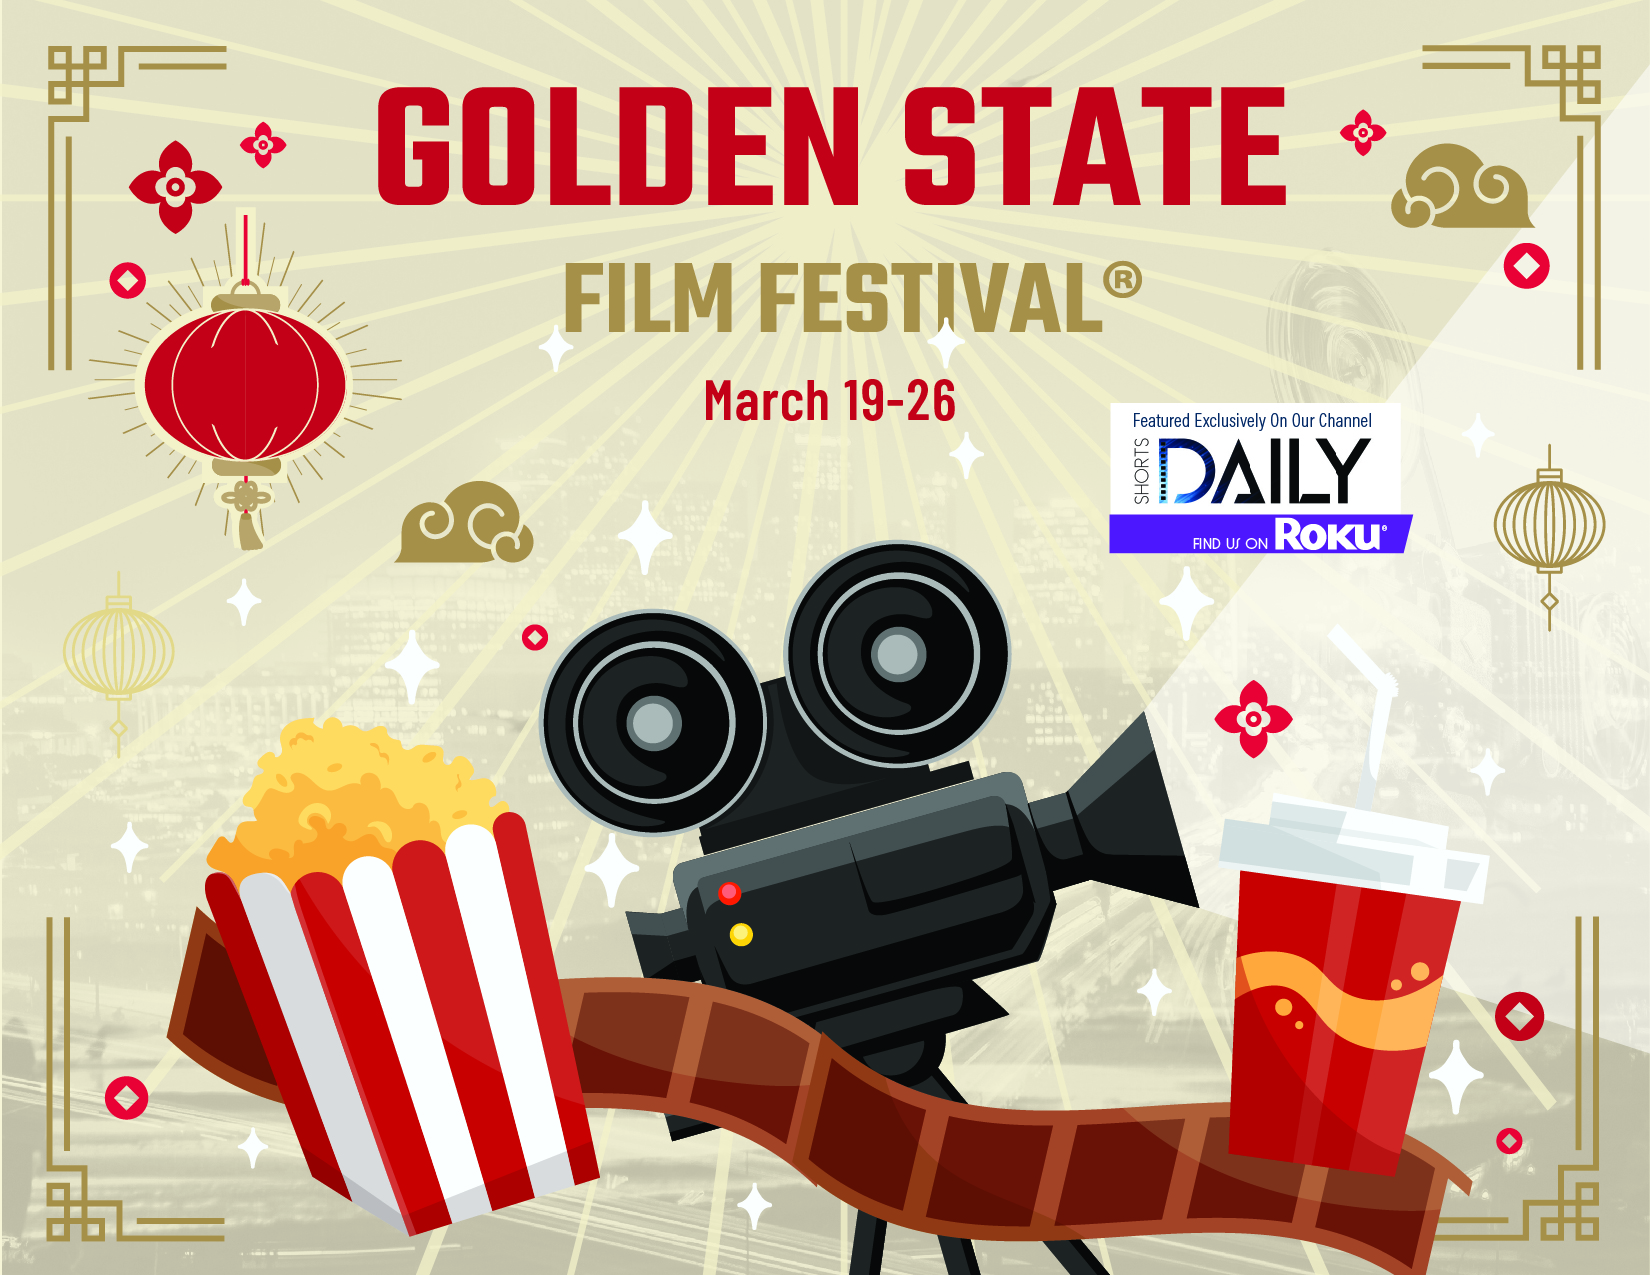 Golden State Film Festival 2021 ShortsDaily Screening Dates